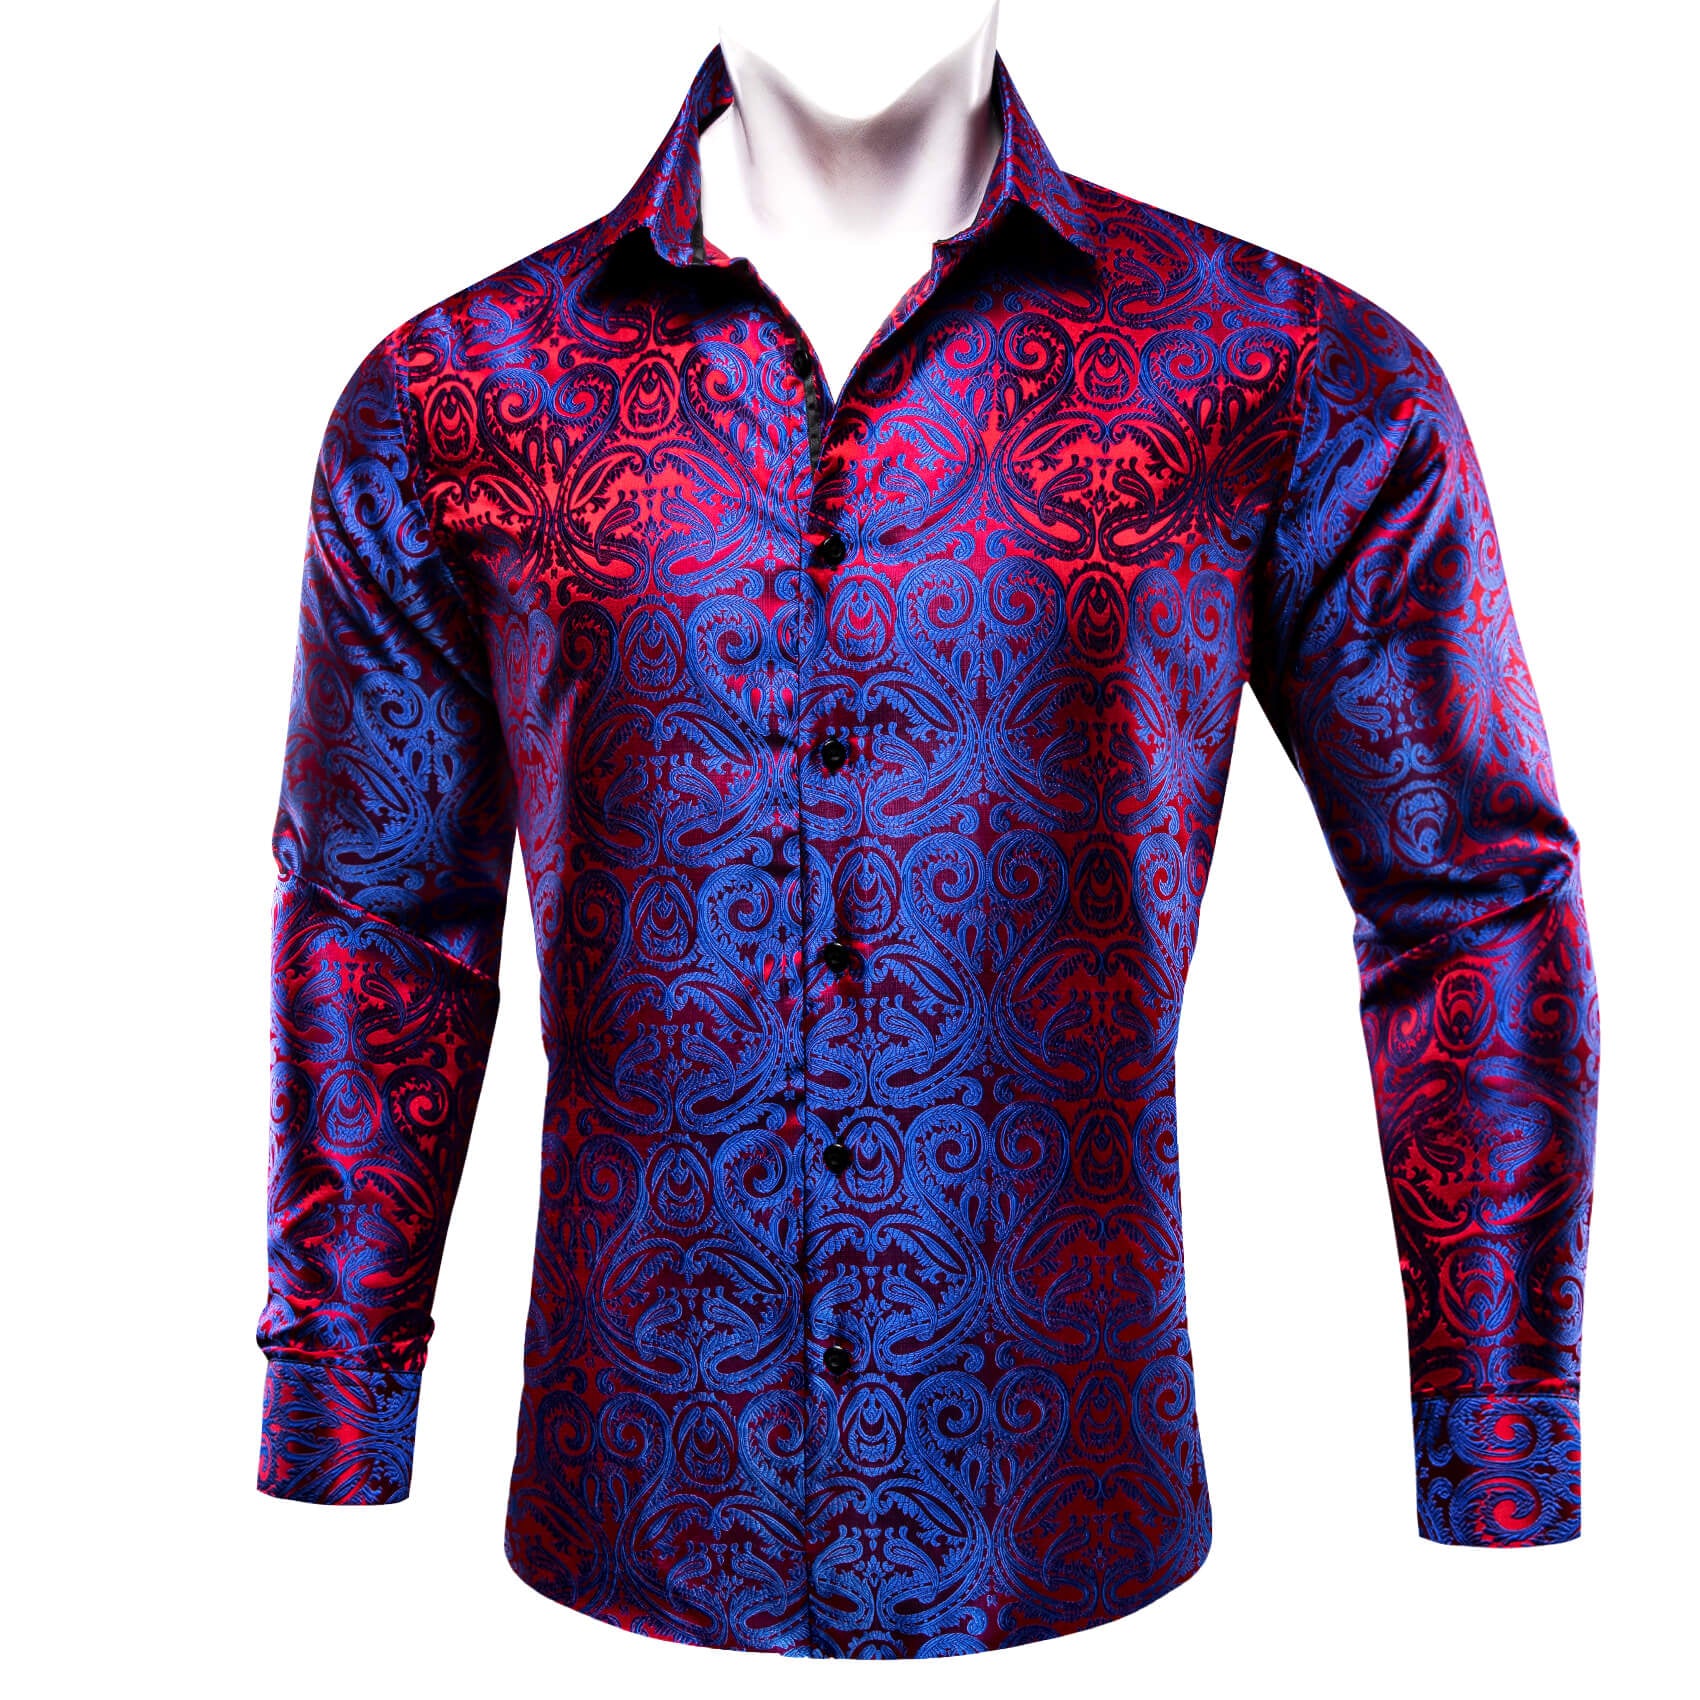 Barry.wang Men's Shirt Blue Red Paisley Silk Long Sleeve Shirt High Quality